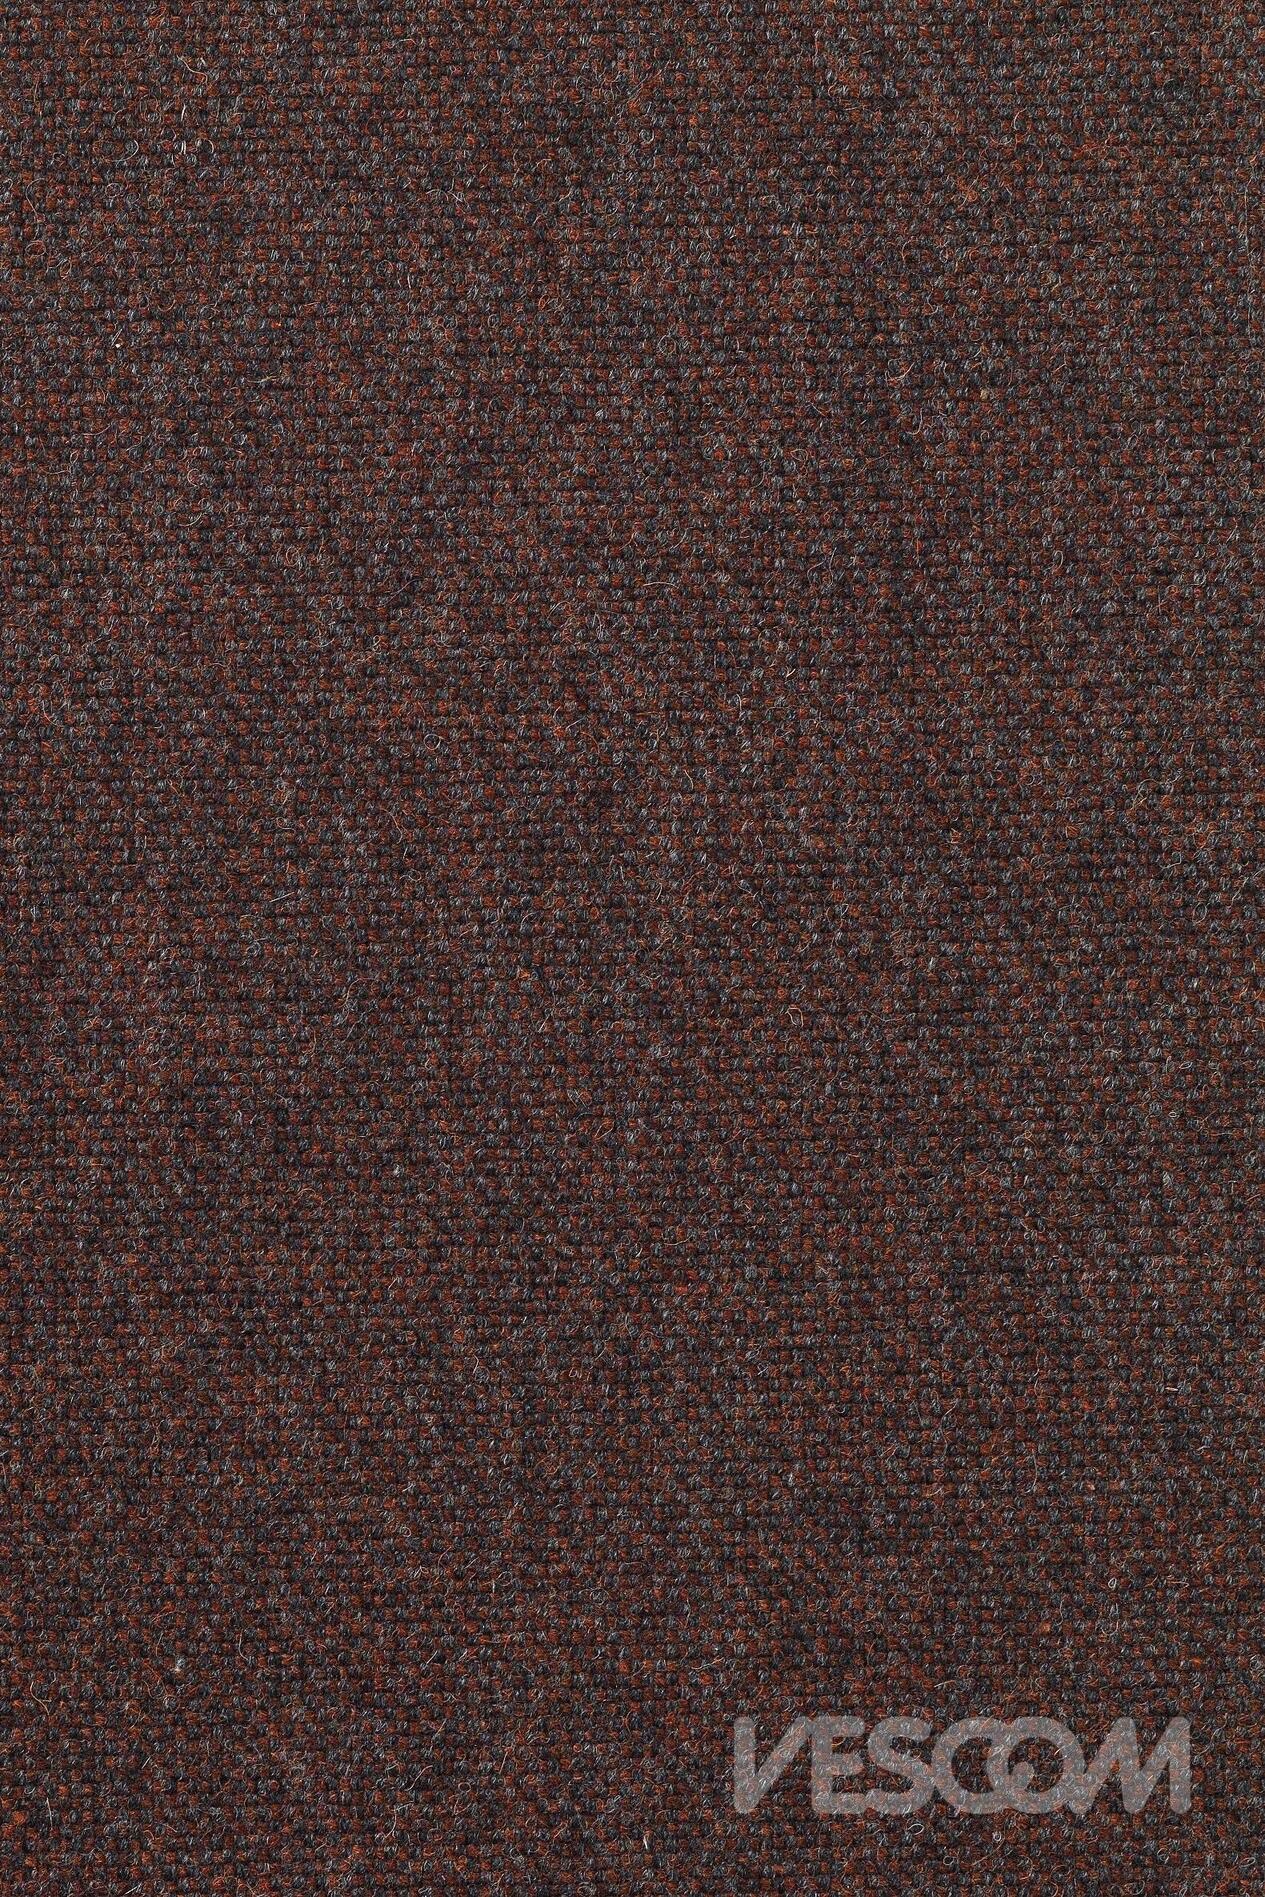 Vescom-Wolin-Upholstery-Fabric-7050.47.jpg